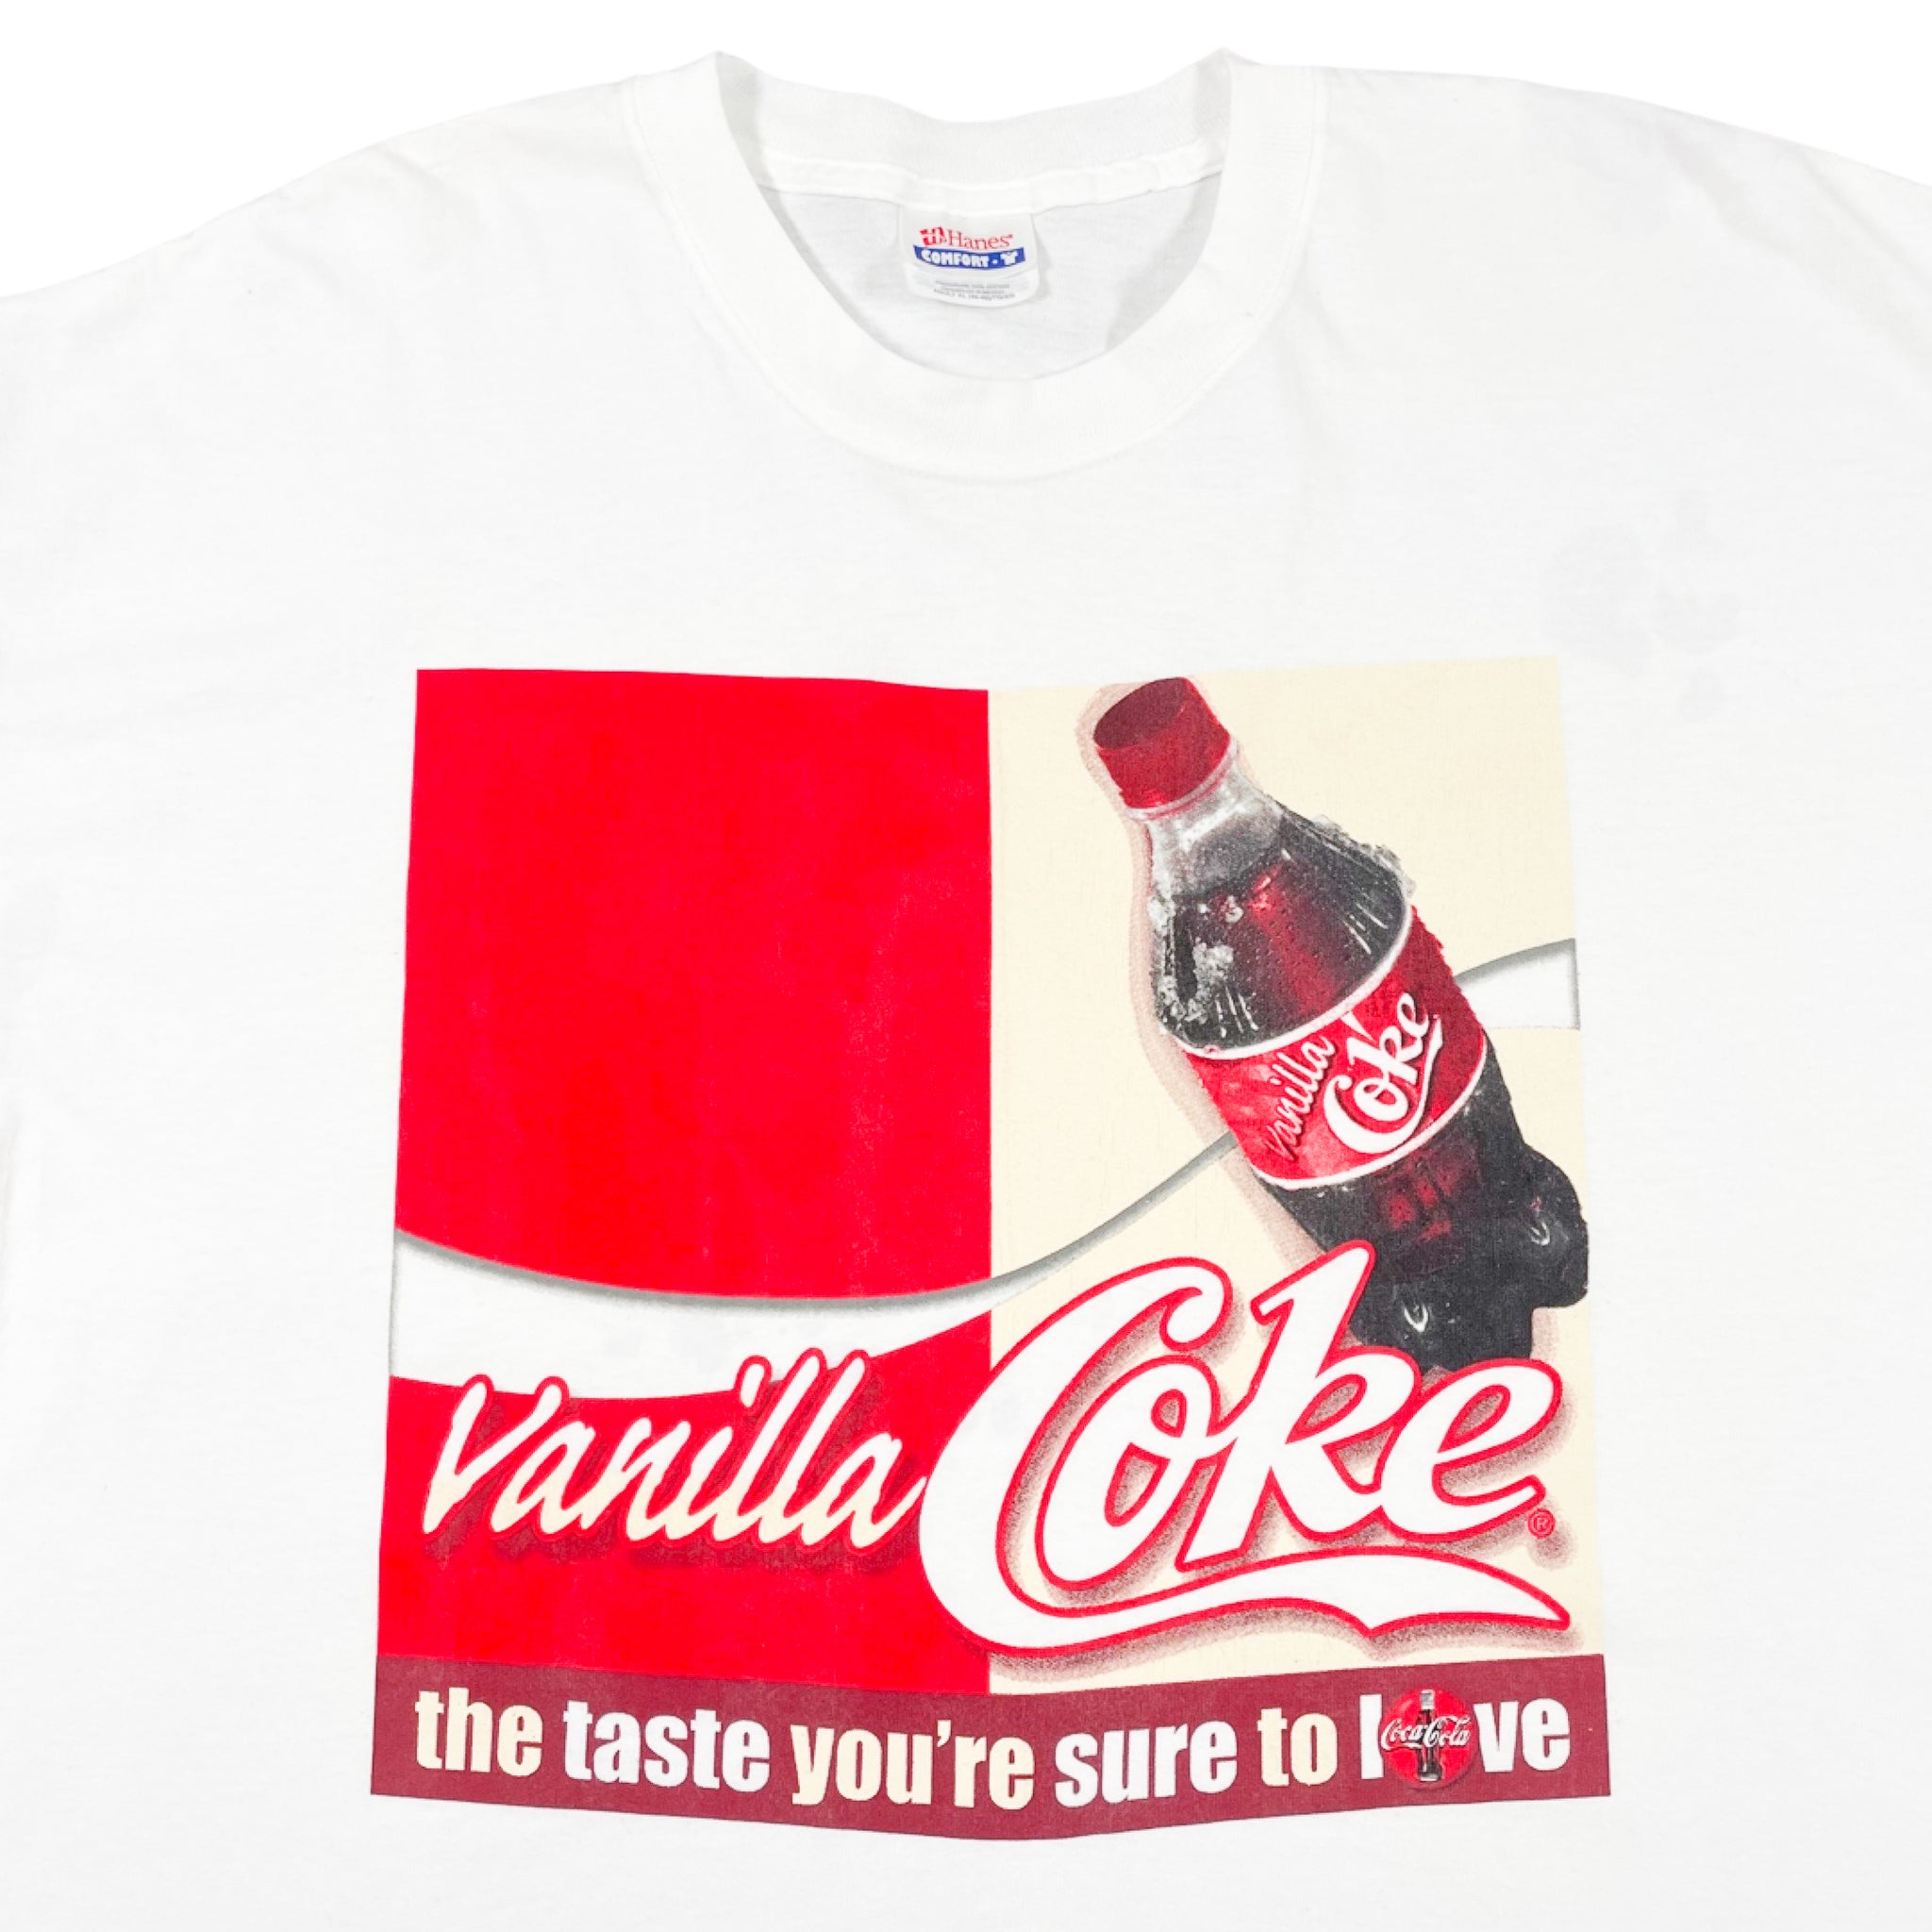 COKE PRICEWhite T-Shirt – 1800-Paradise